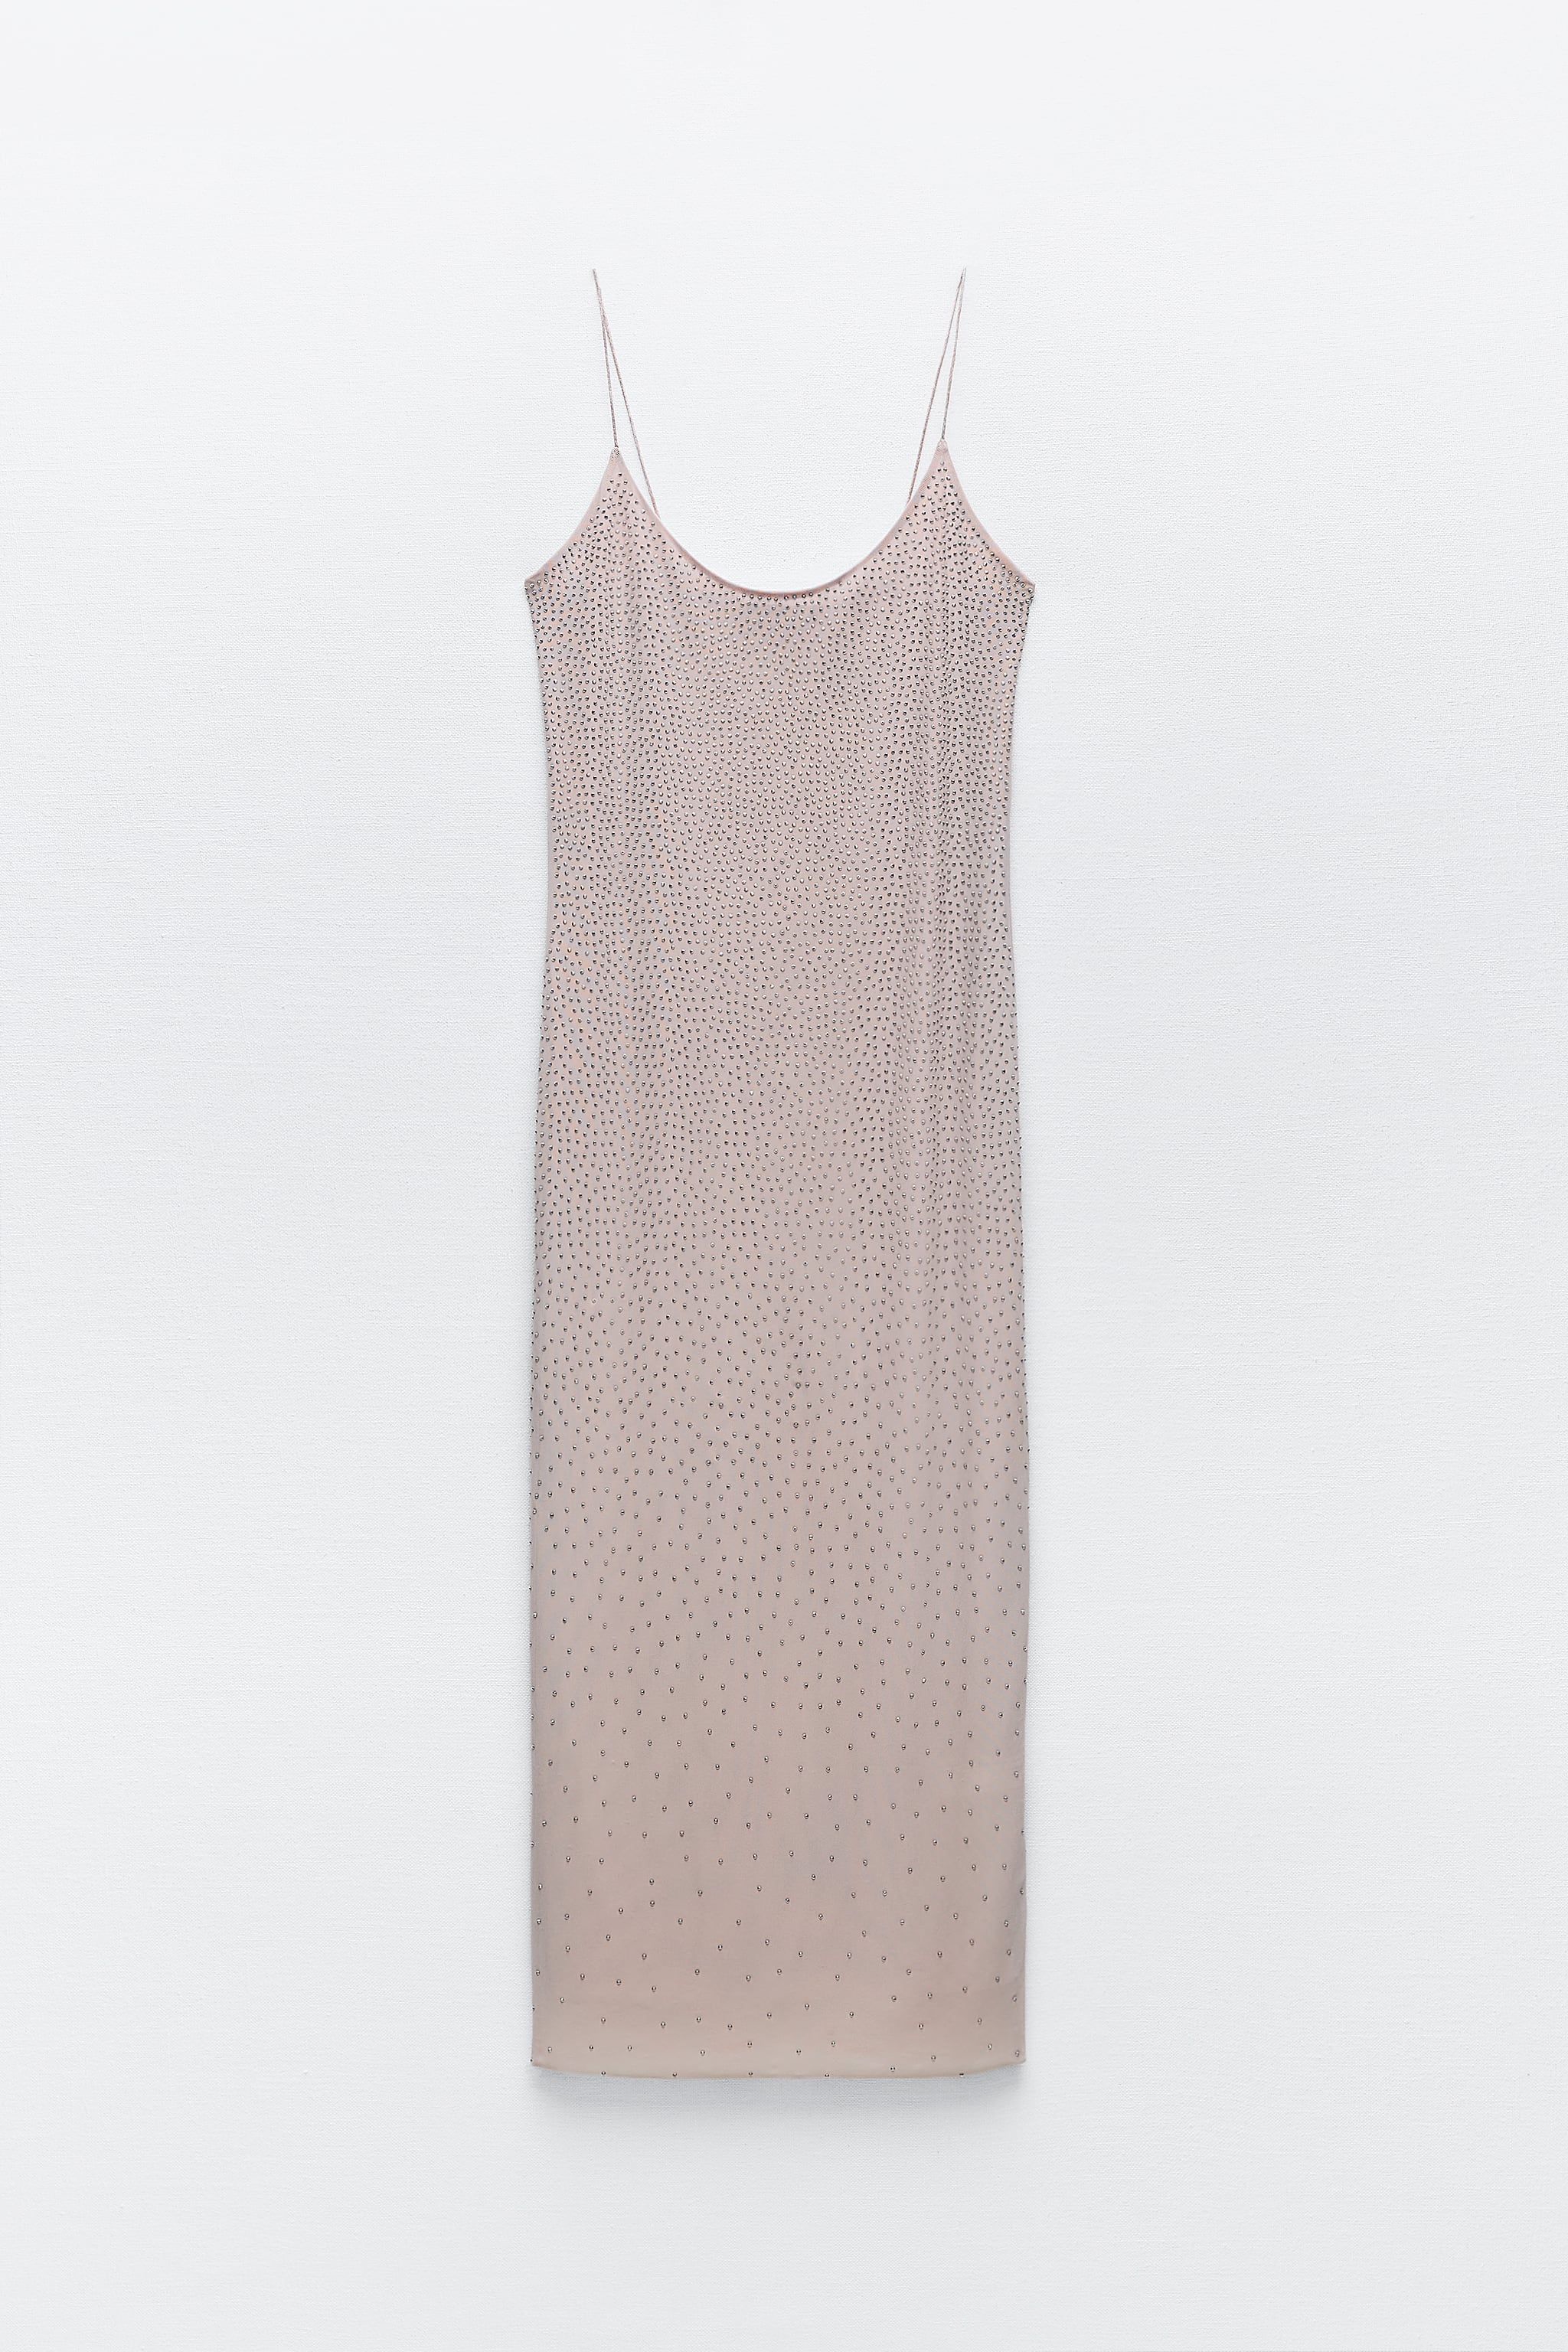 Zara + Rhinestone Tulle Dress